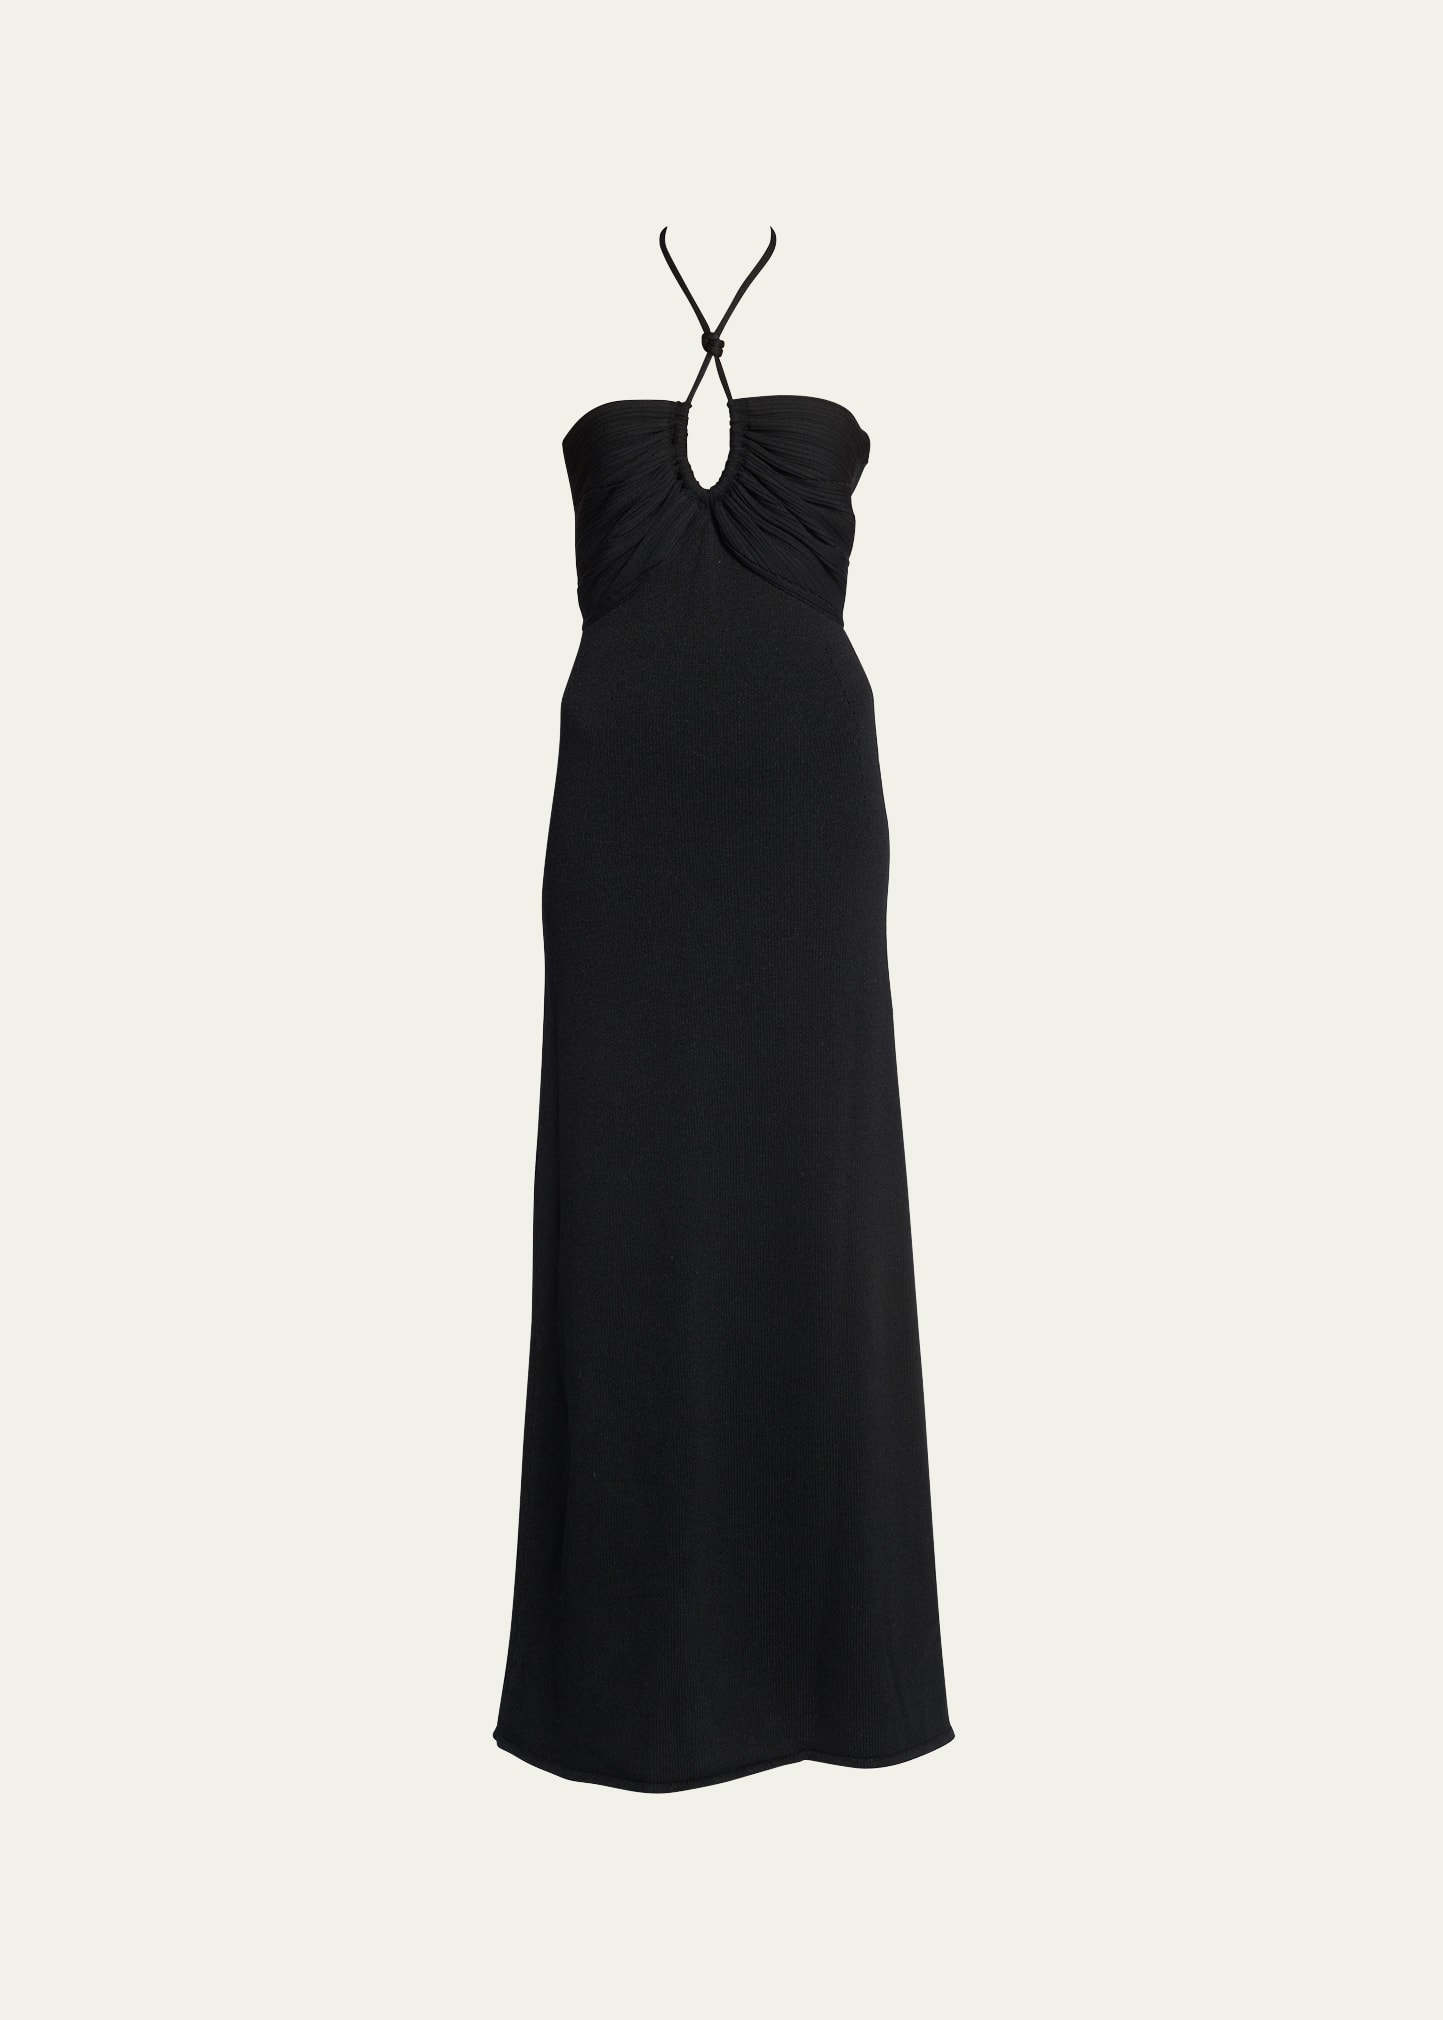 Proenza Schouler Textured Cotton Knit Halter Dress In Black